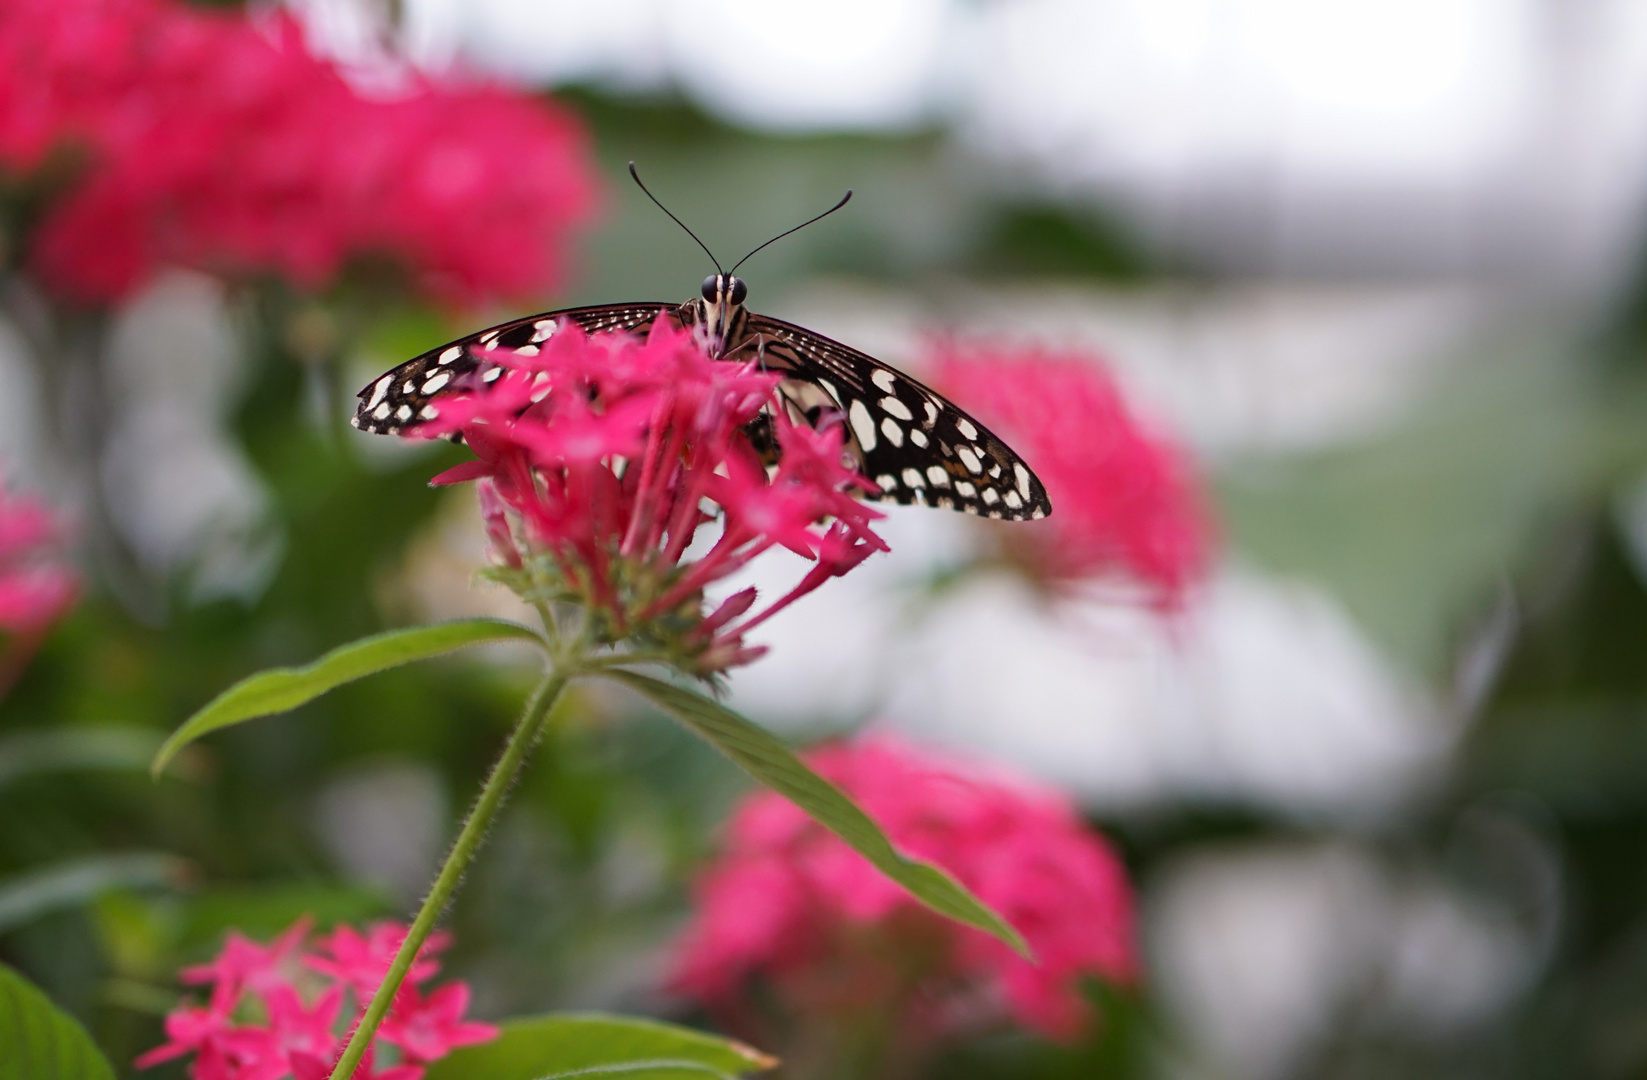  Zitrus-Schwalbenschwanz, Papilio demoleus